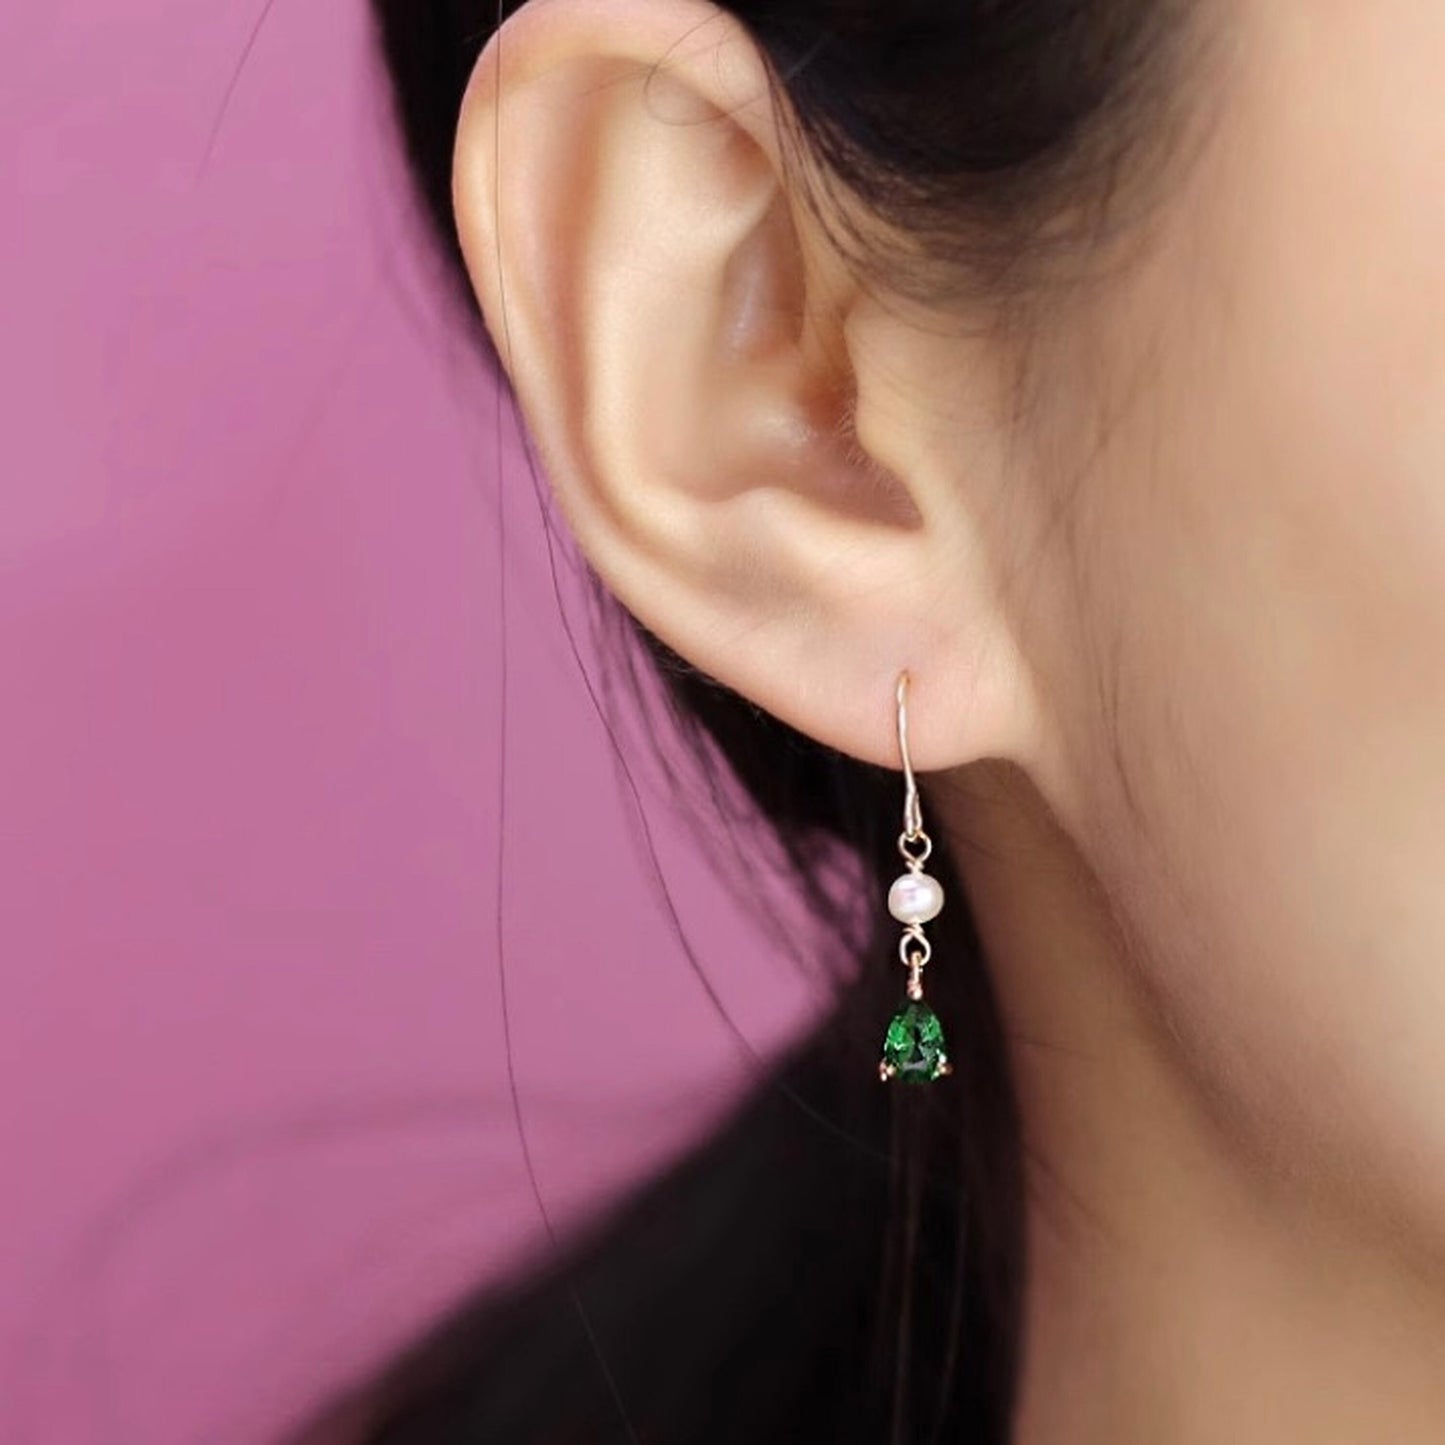 Handmade Emerald Green Earrings, Teardrop Emerald Pearl Earrings, Gold Emerald Bridesmaid Wedding Earrings, Elegant Jewelry Gift, Delicate